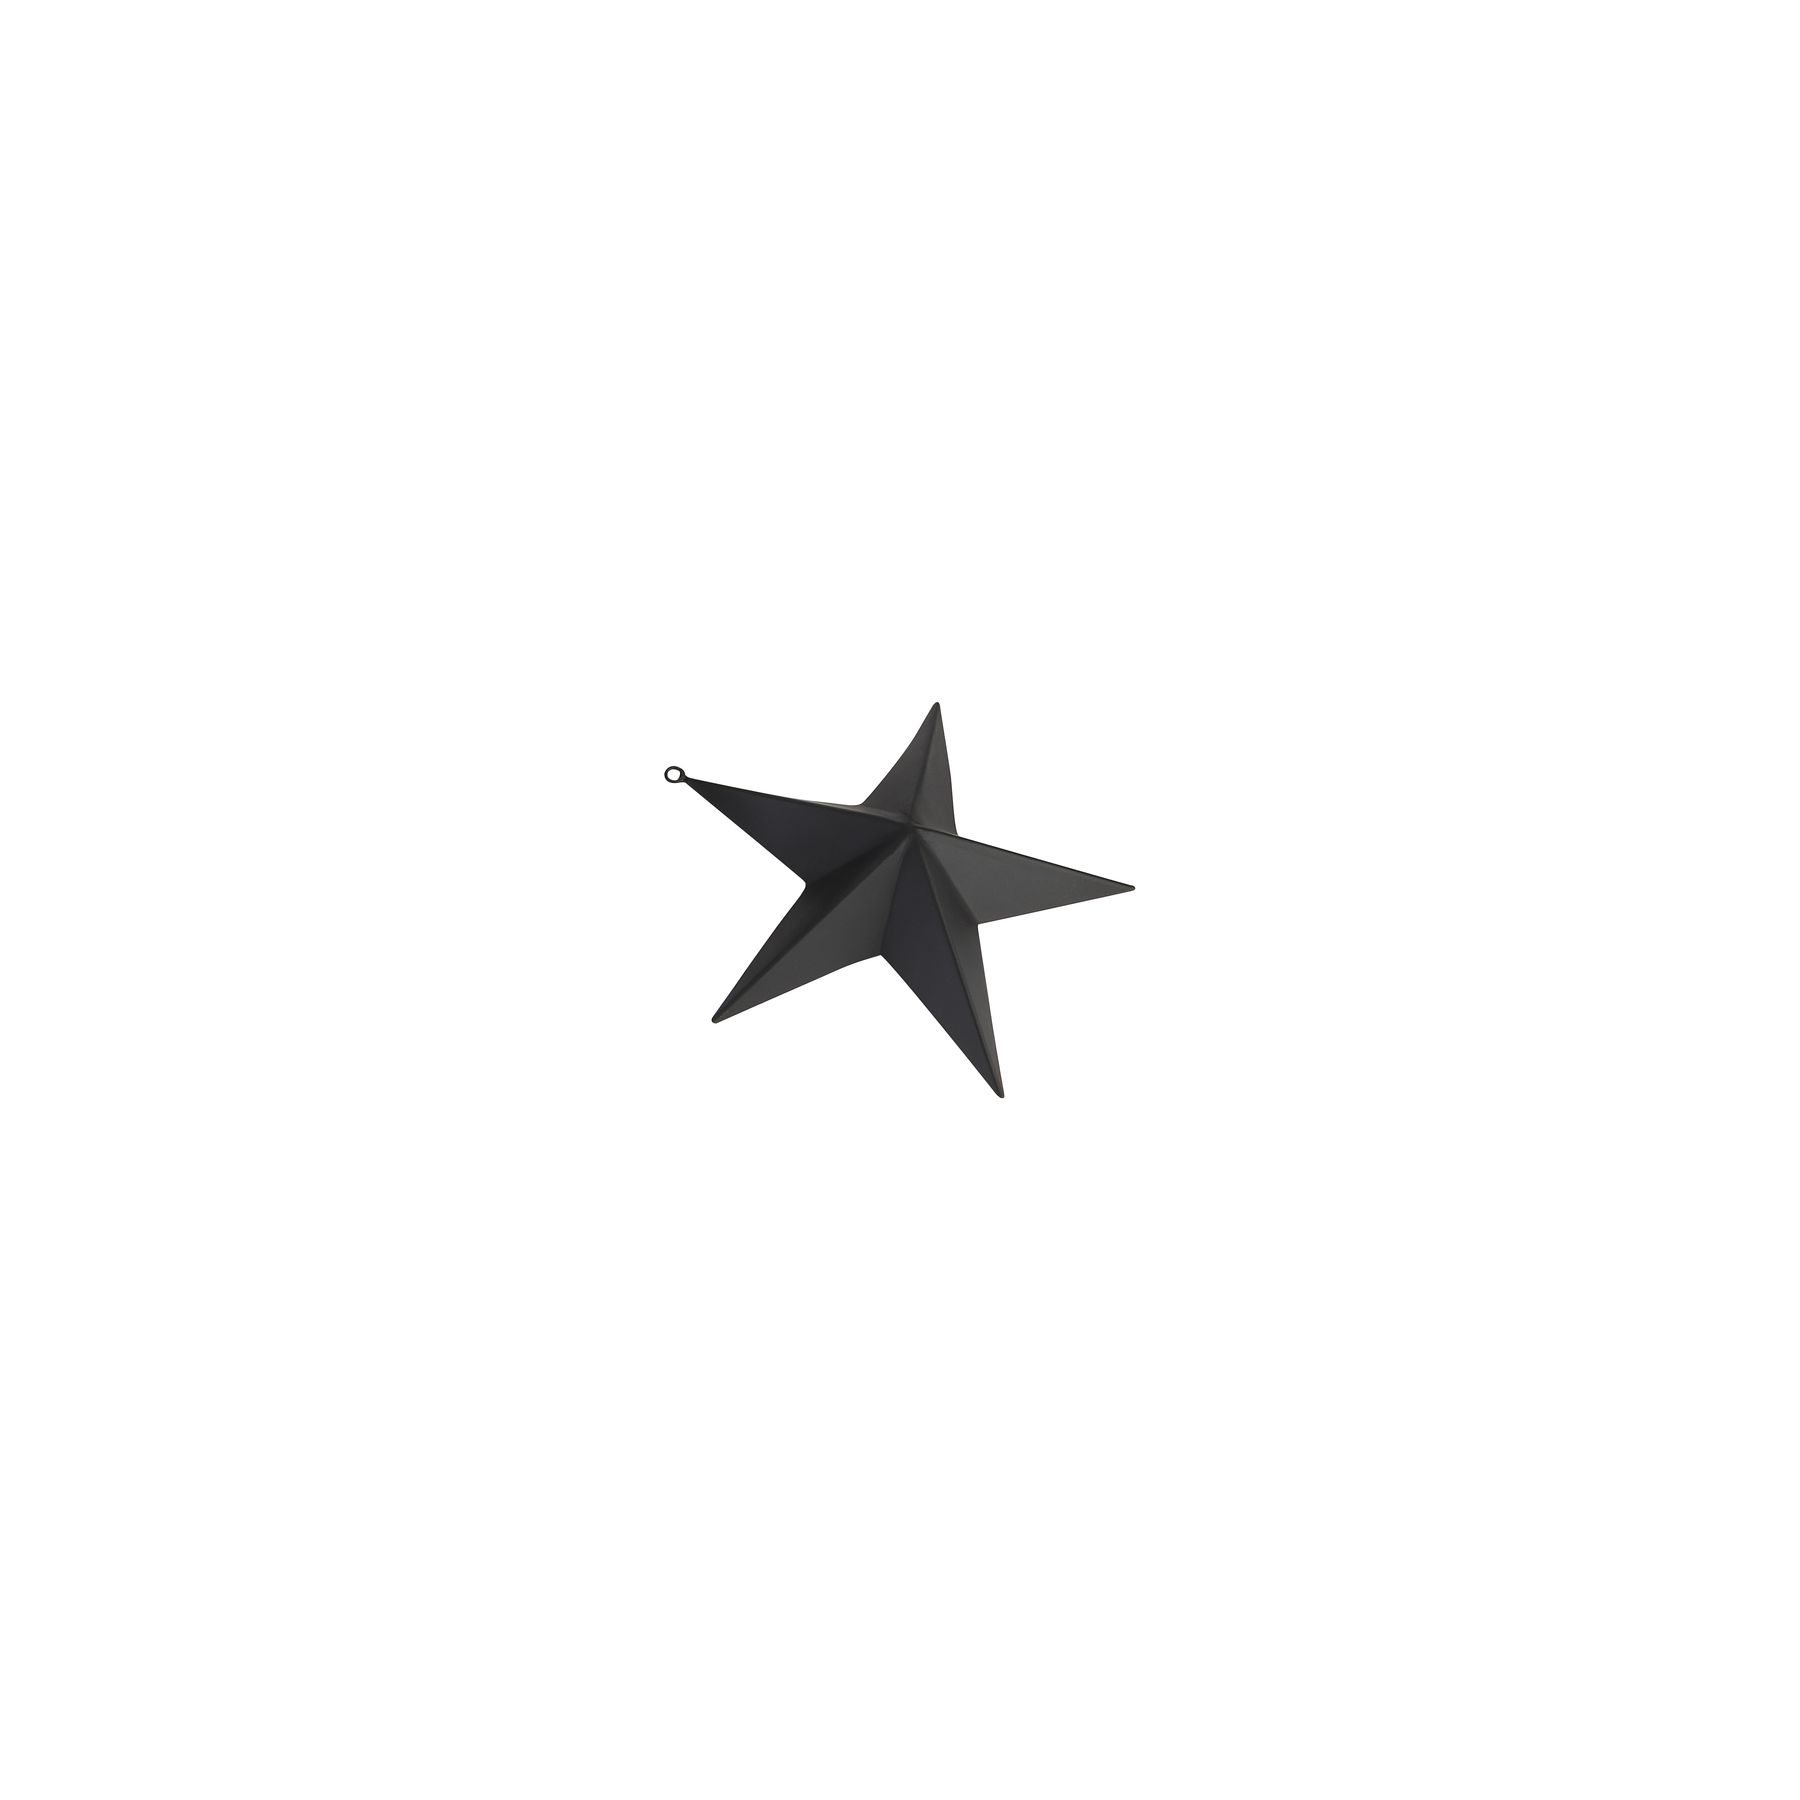 Matt Black Convexed Star - Image 1